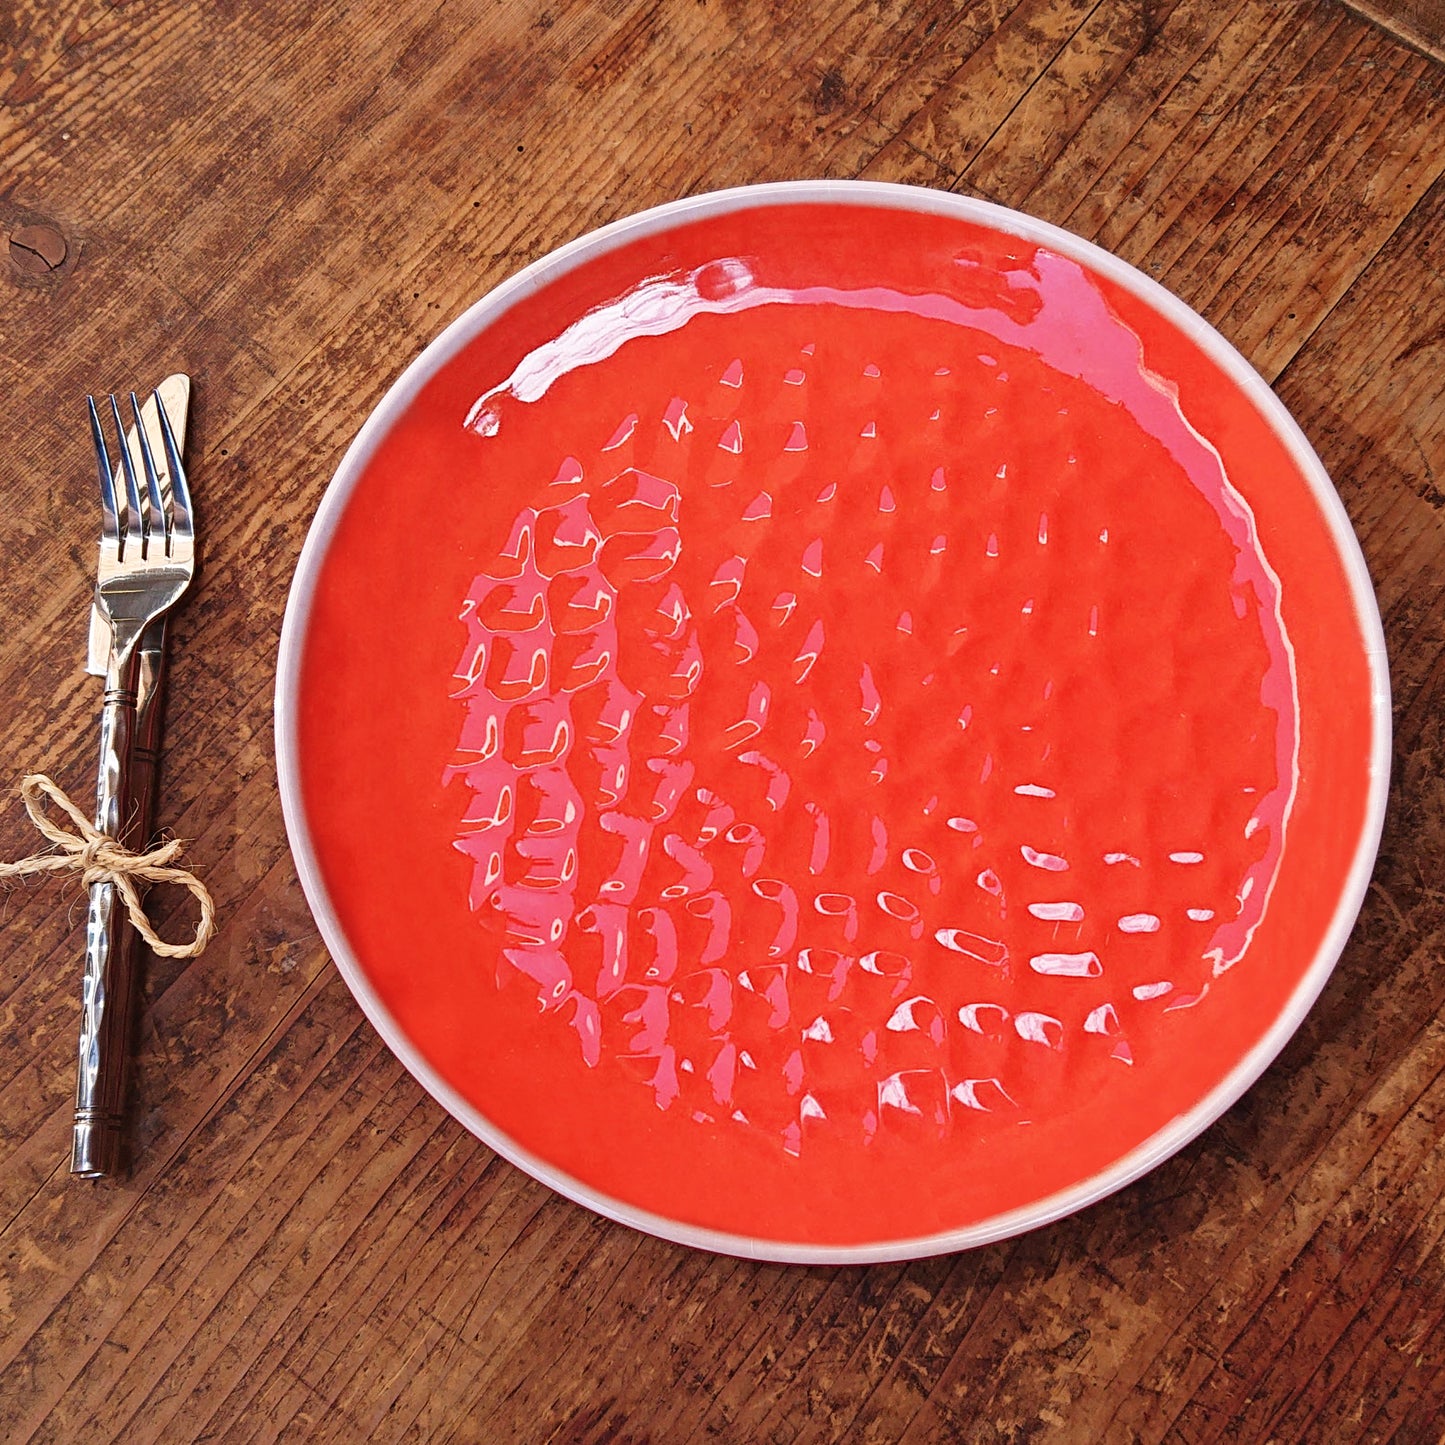 Groot plat bord van 27 cm van pure melamine - Rood. 2 stukken